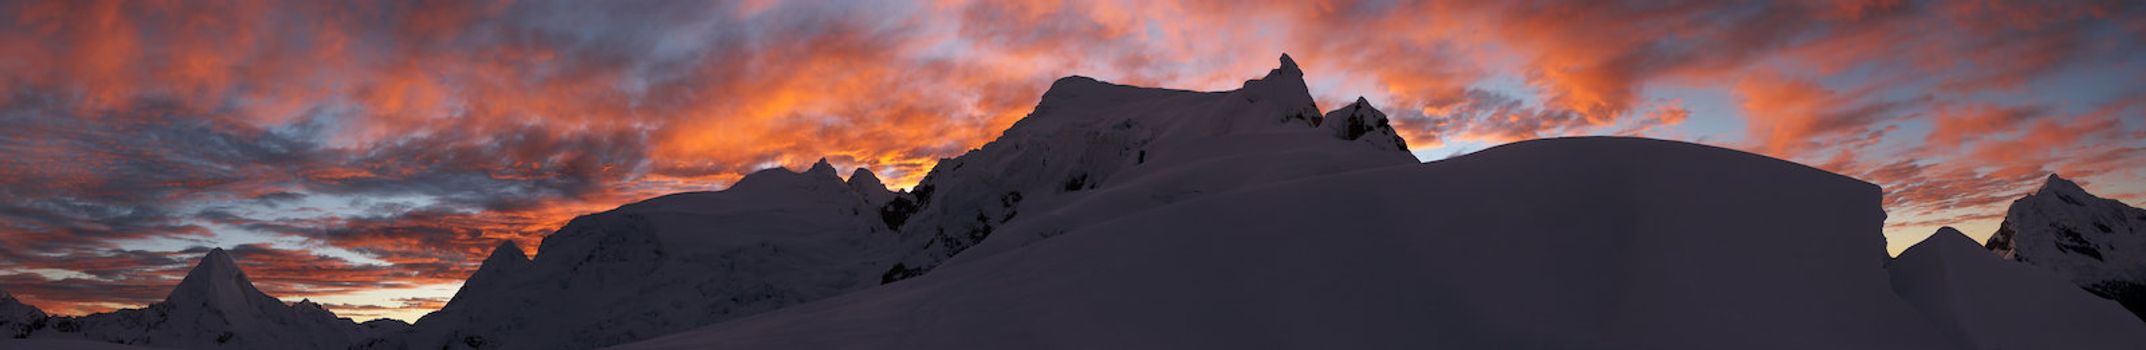 Panoramic image of sunrise over Pisco mountain, Cordillera Blanca, Peru.